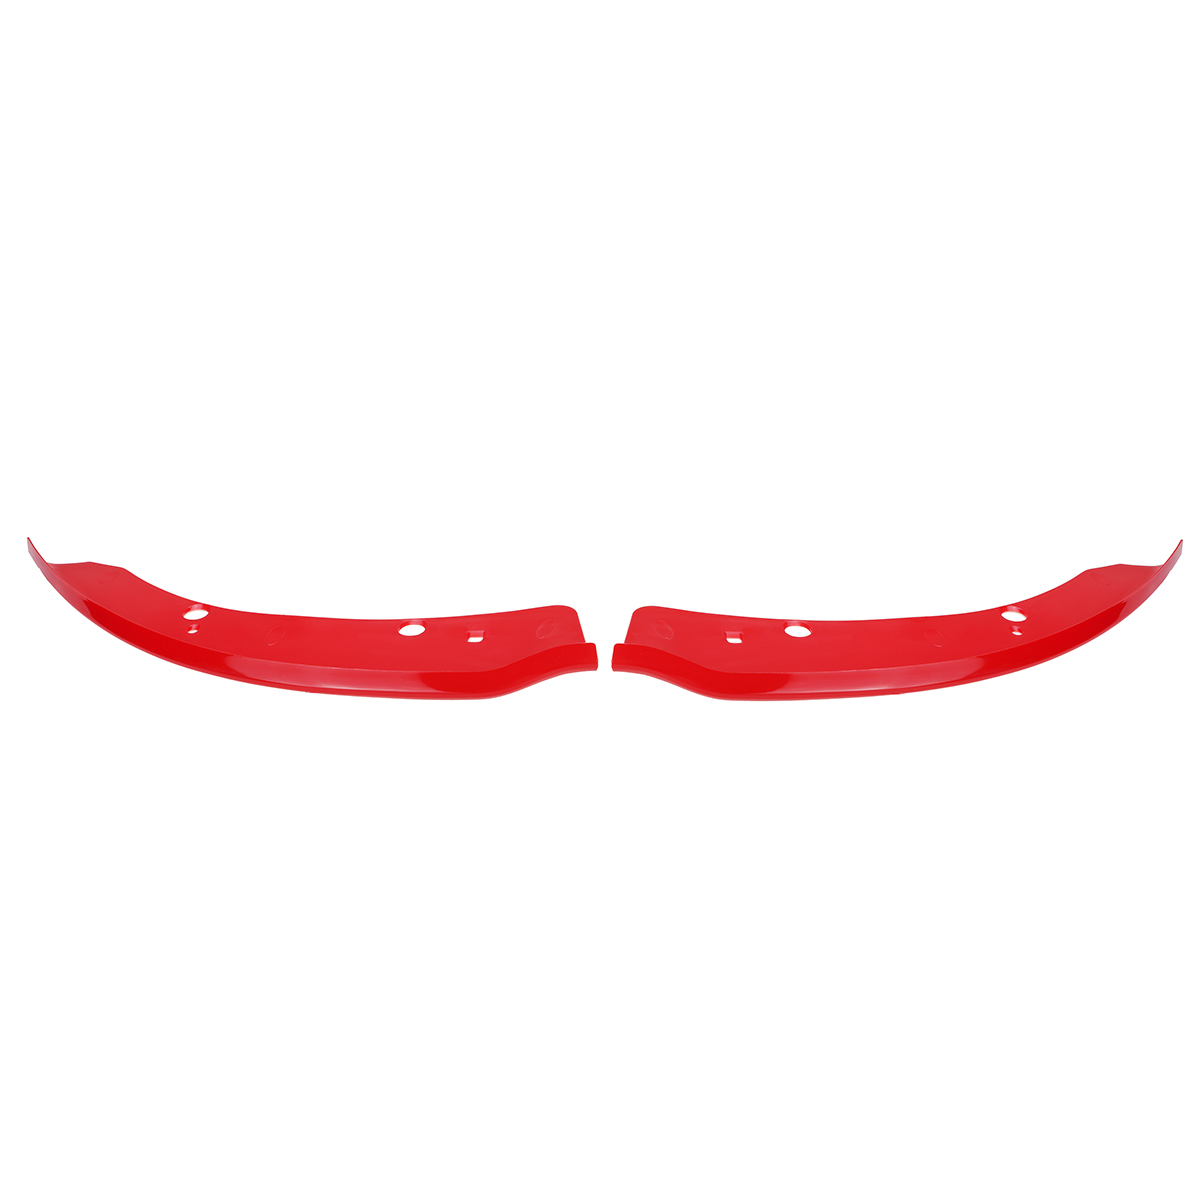 Protector de divisor de labios de parachoques delantero rojo para Dodge Charger SRT Scat Pack 2015-2019